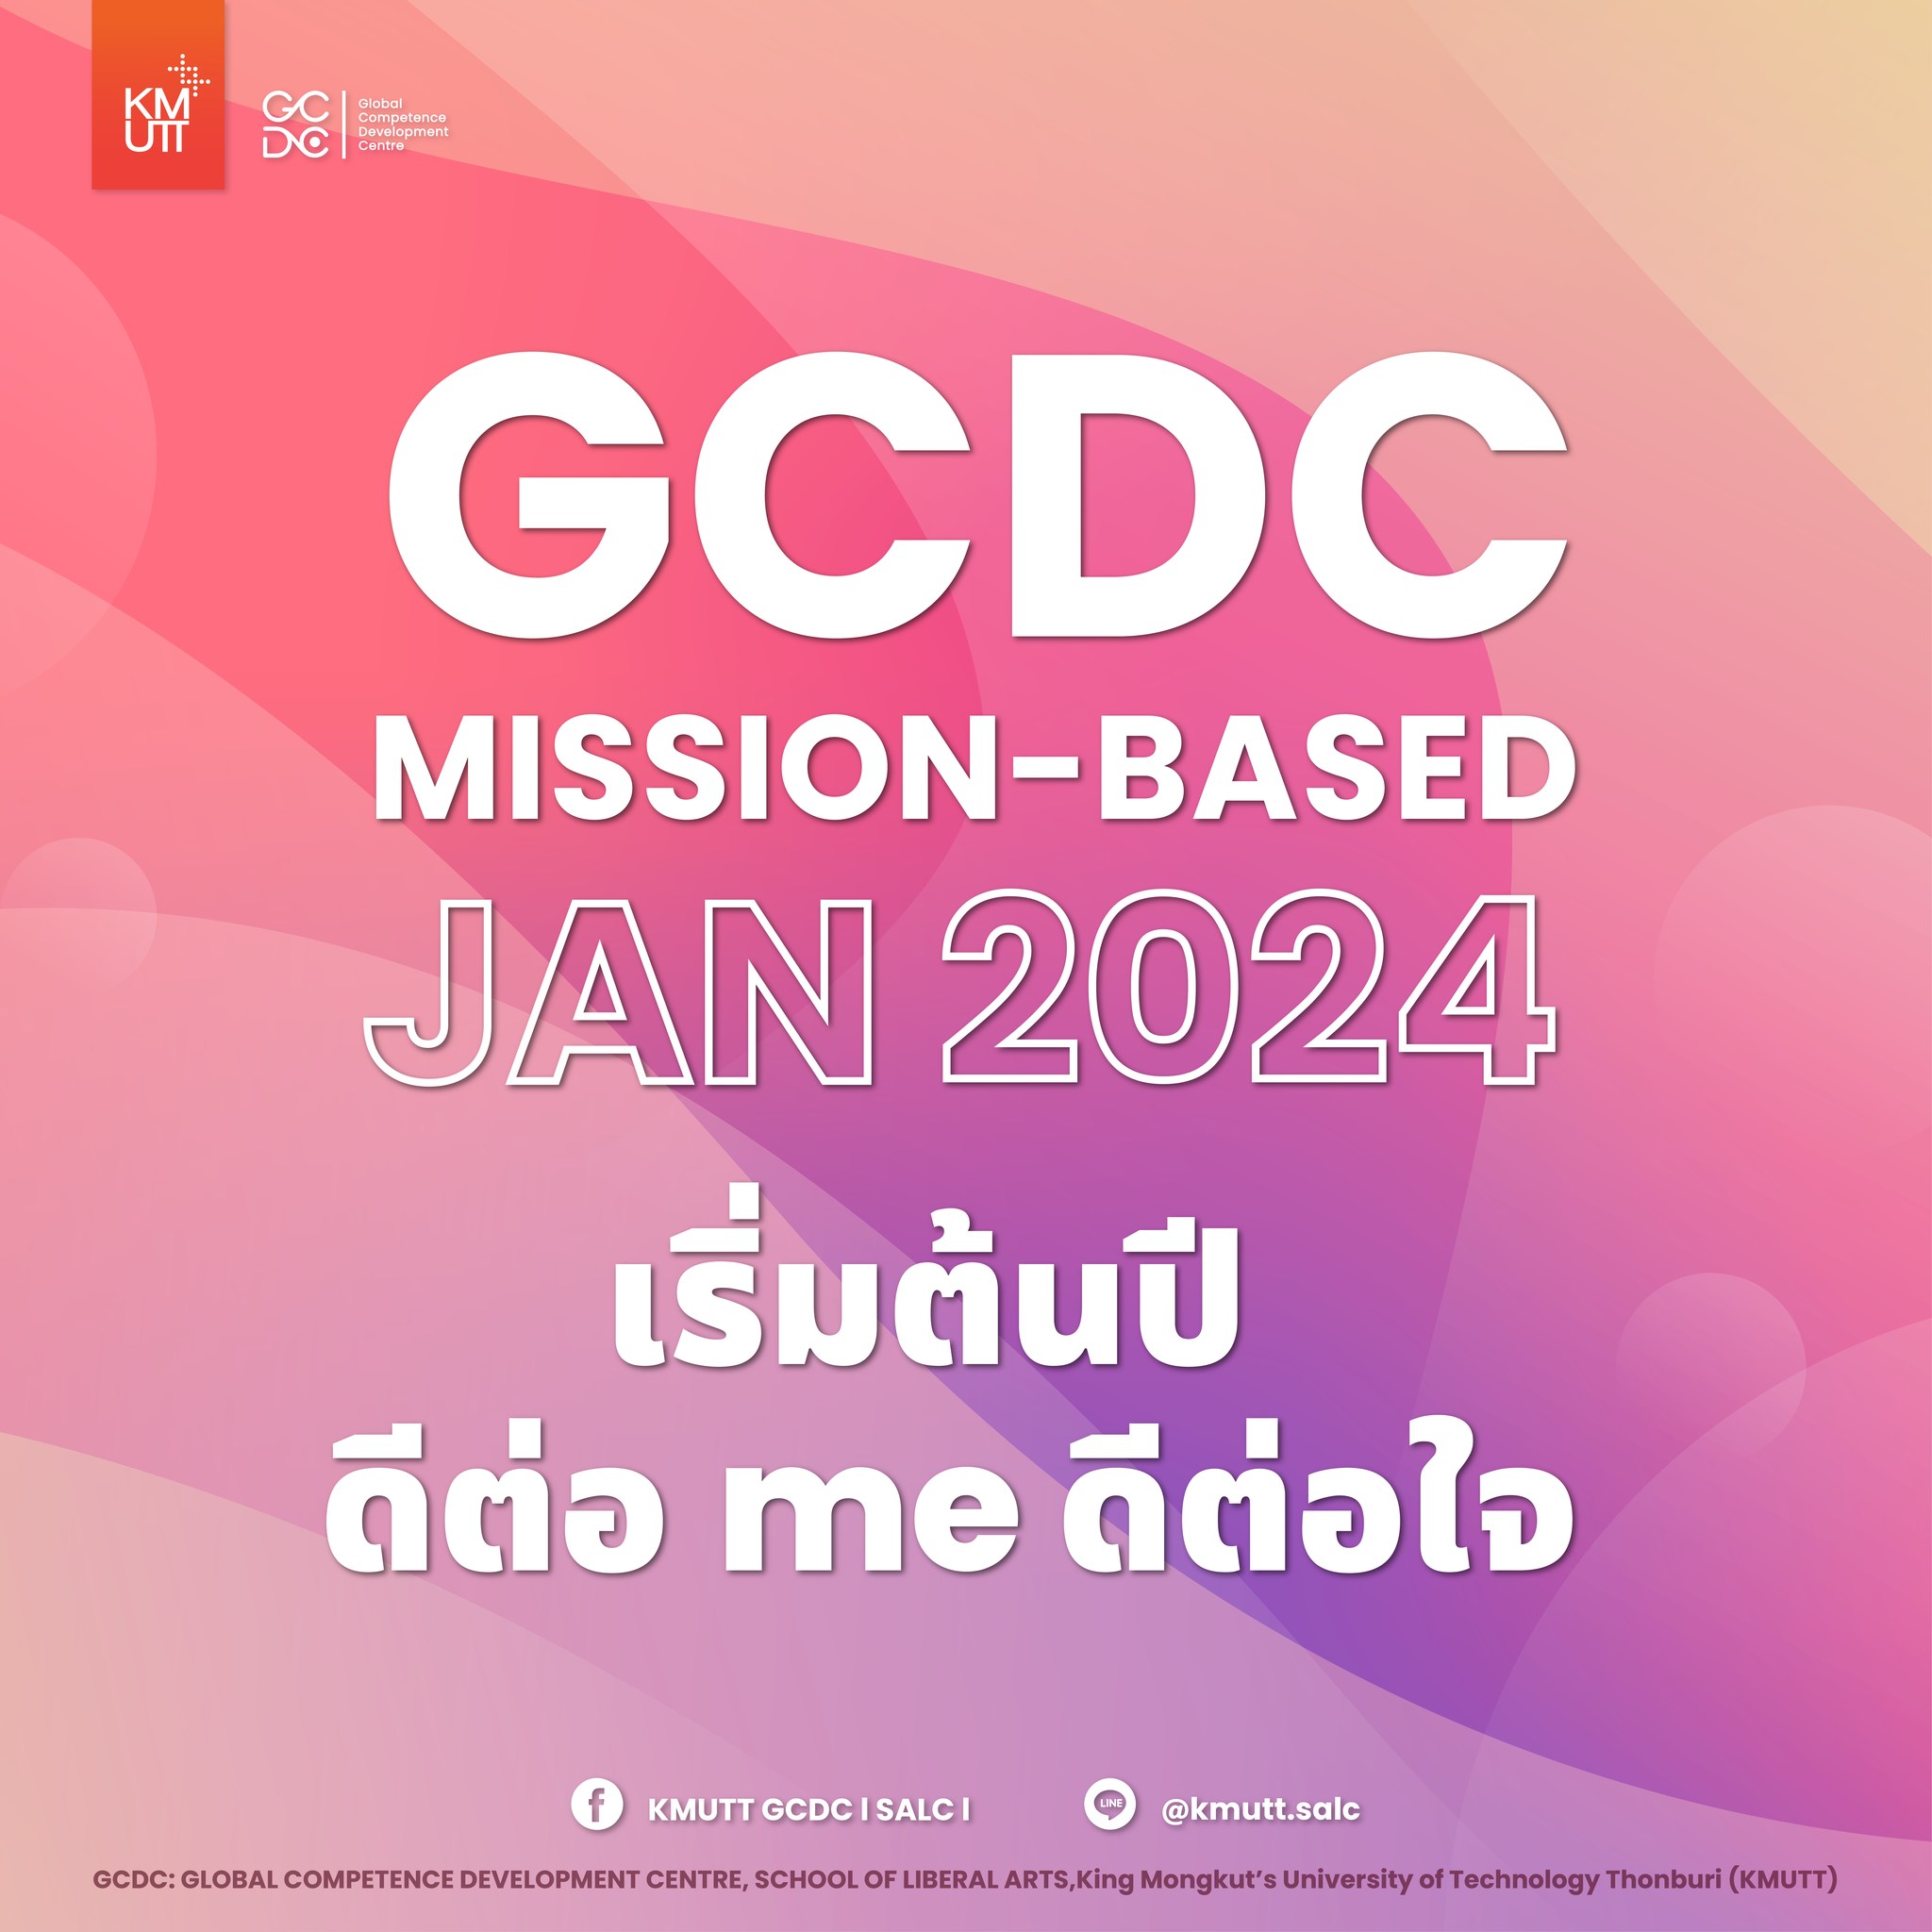 GCDC Mission-based: เริ่มต้นปี ดีต่อ Me ดีต่อใจ